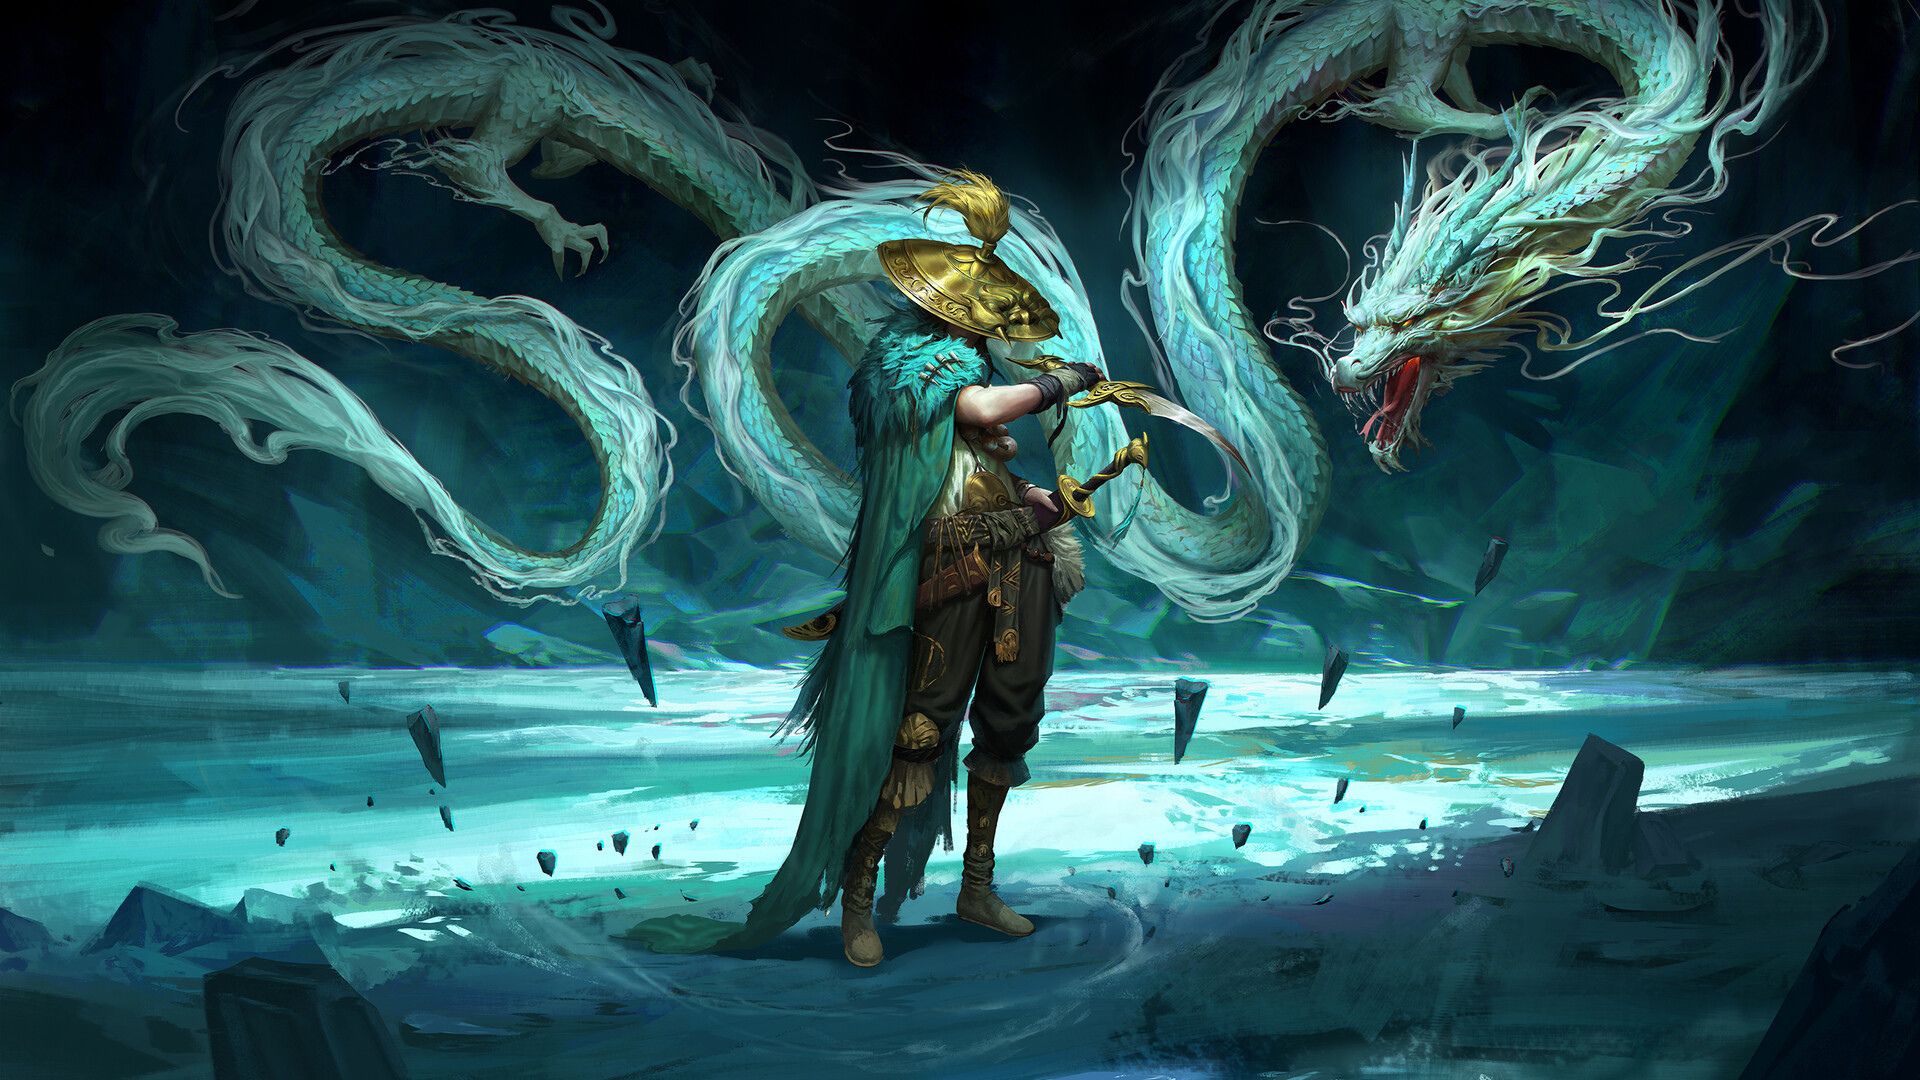 Wallpaper Dragon and warrior, fantasy